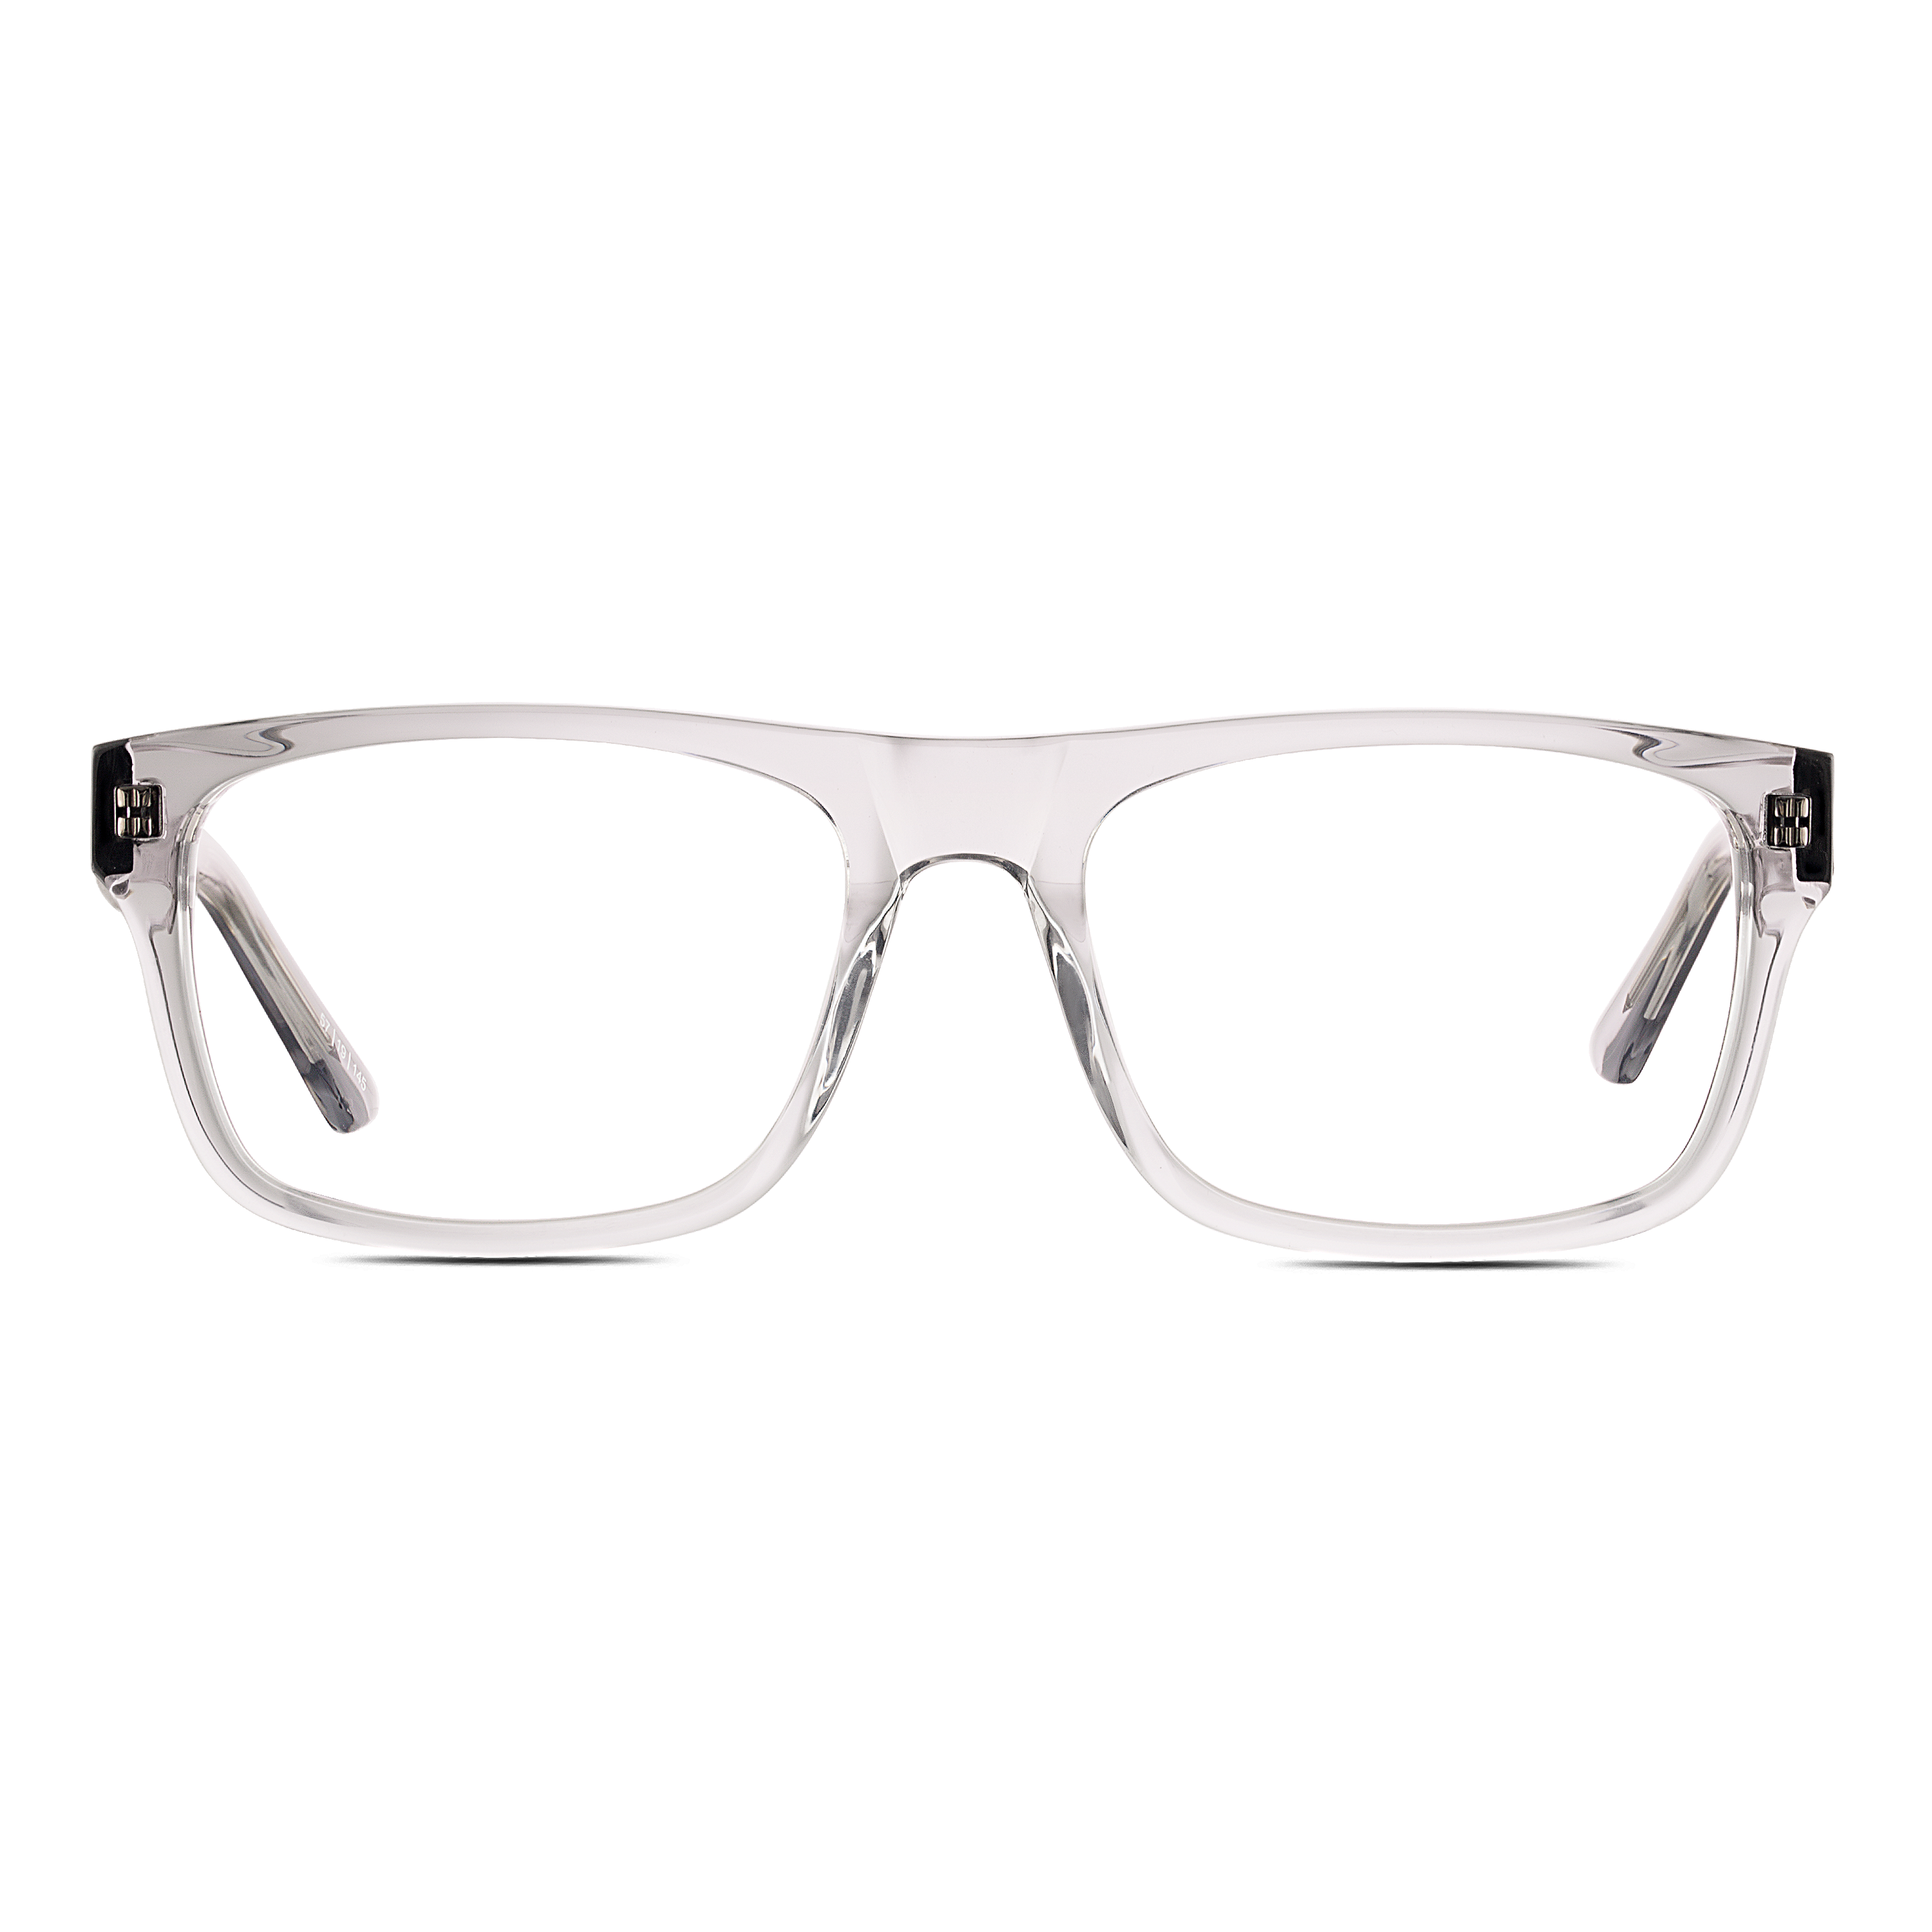 7THIRTY7 - Tinted-Crystal - Eyeglasses Frame - Johnny Fly Eyewear | 